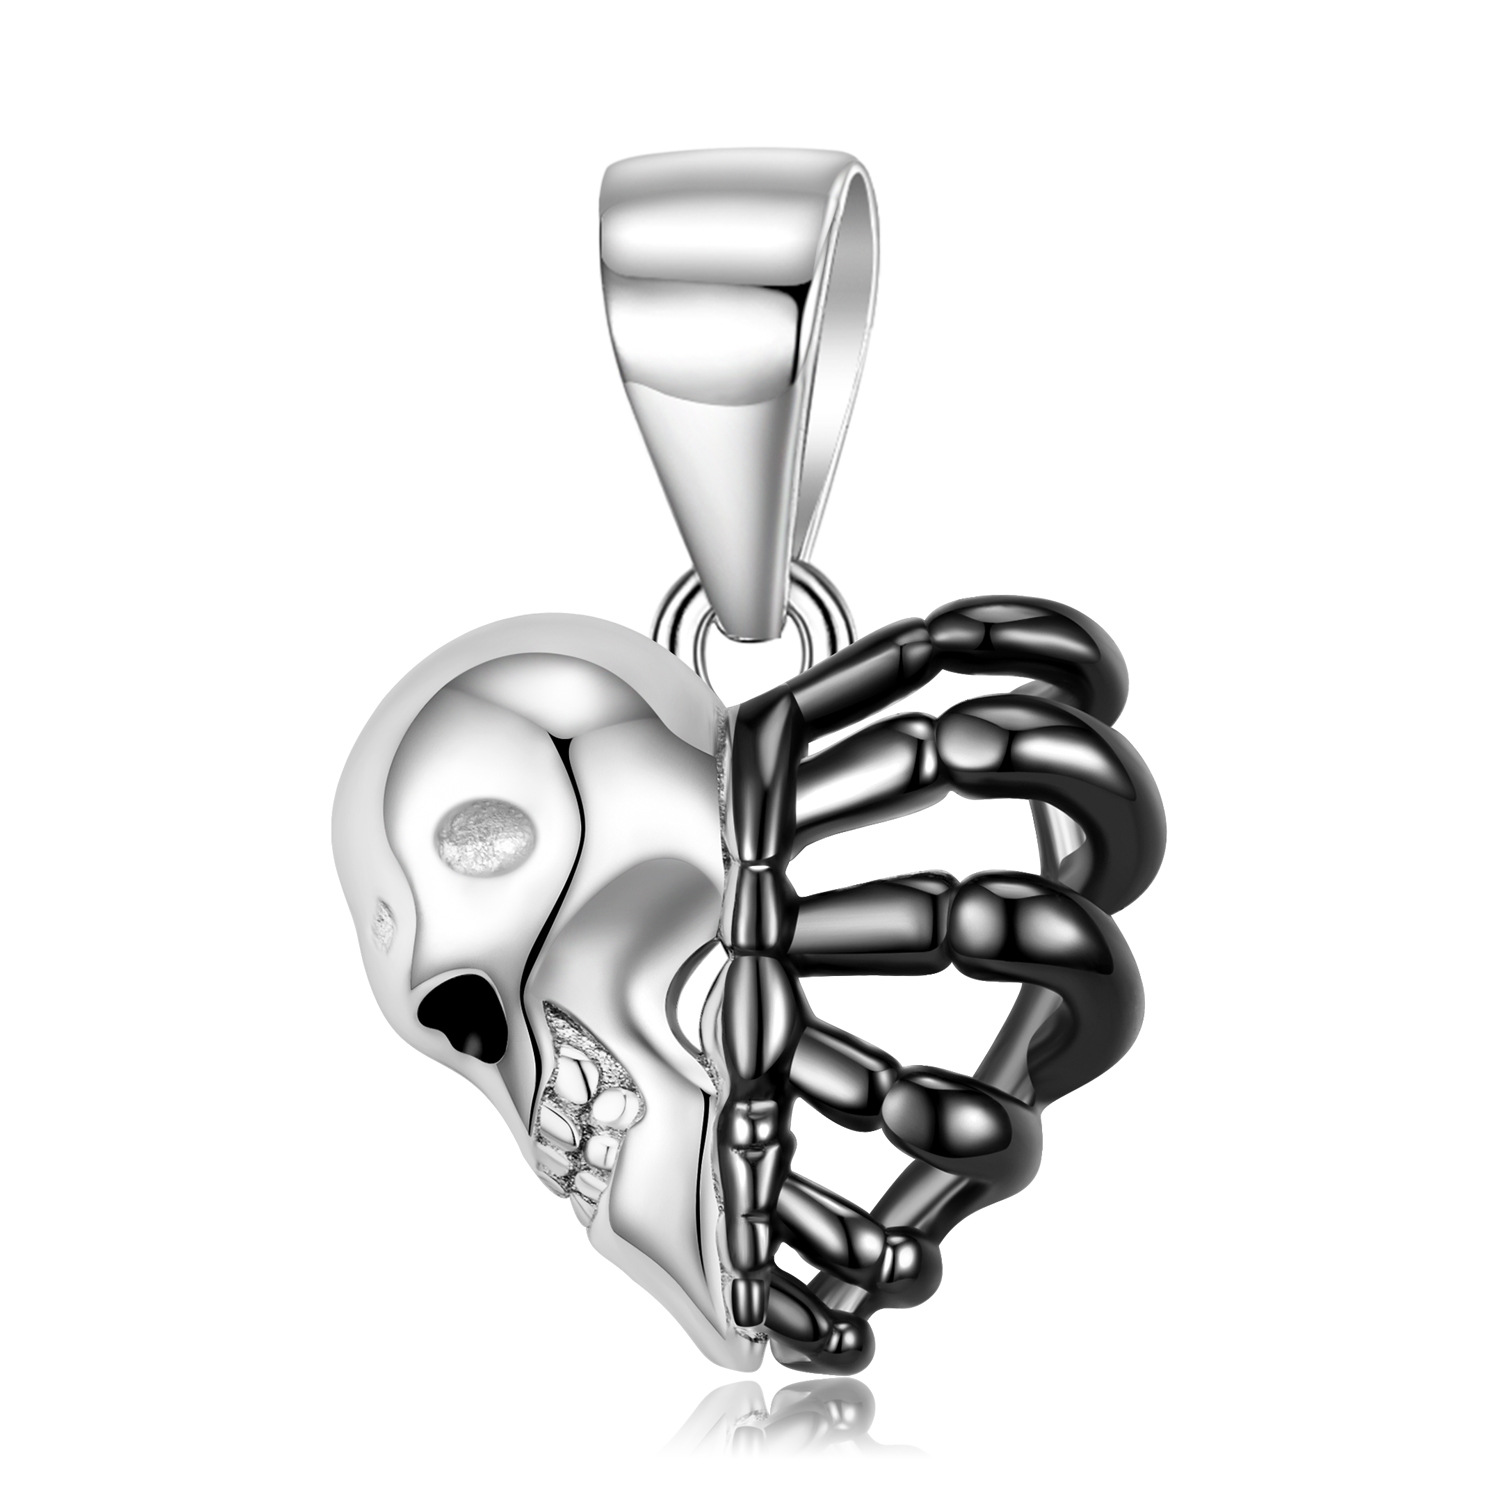 Element Silver Skull Heart Skeleton Sterling Silver Pendanat Necklace